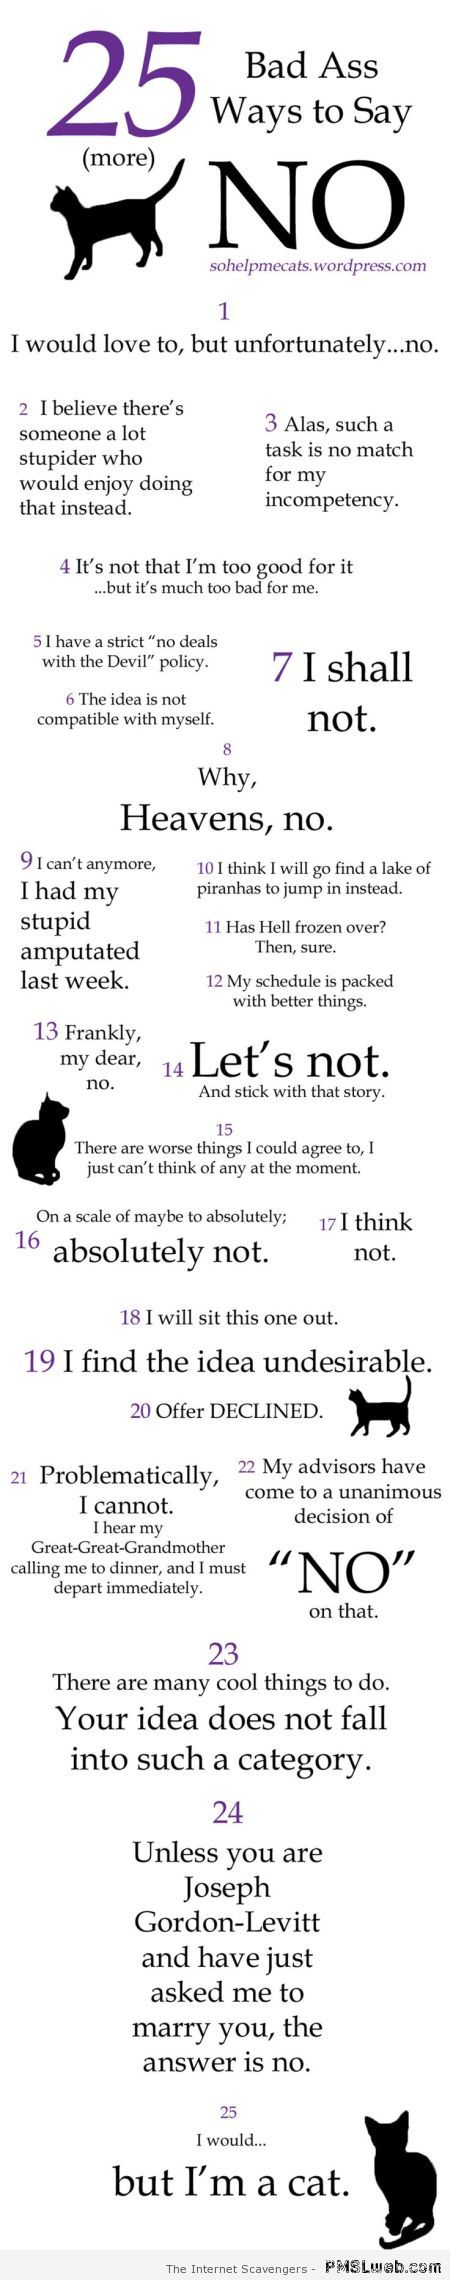 25 badass ways to say no at PMSLweb.com